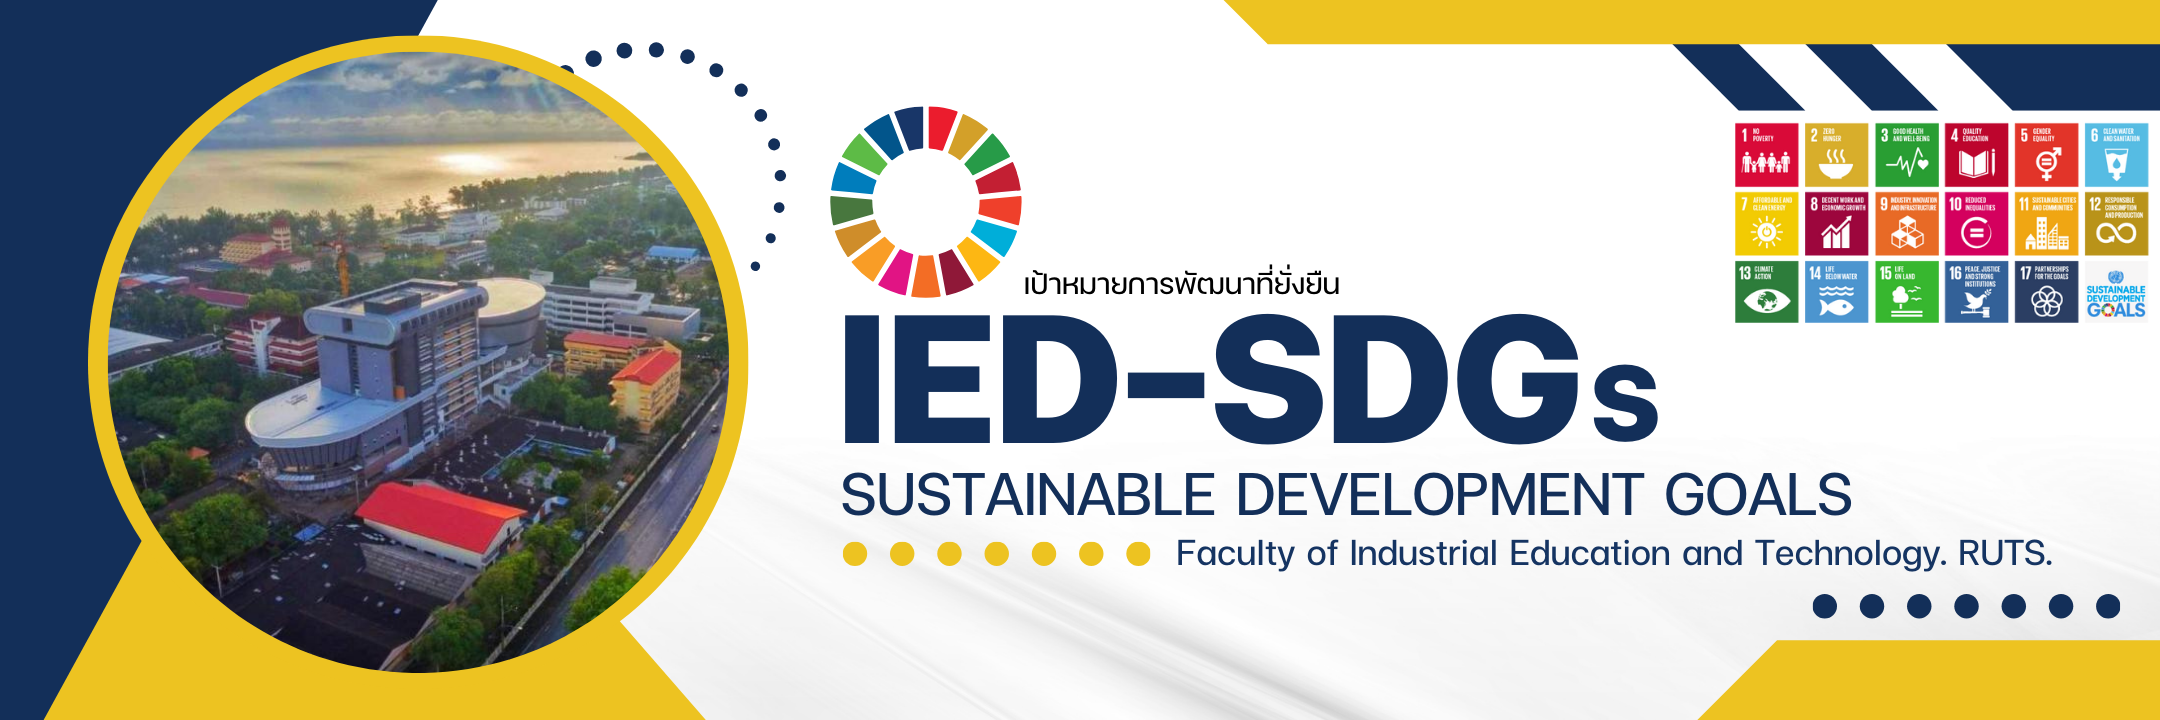 IED-SDG